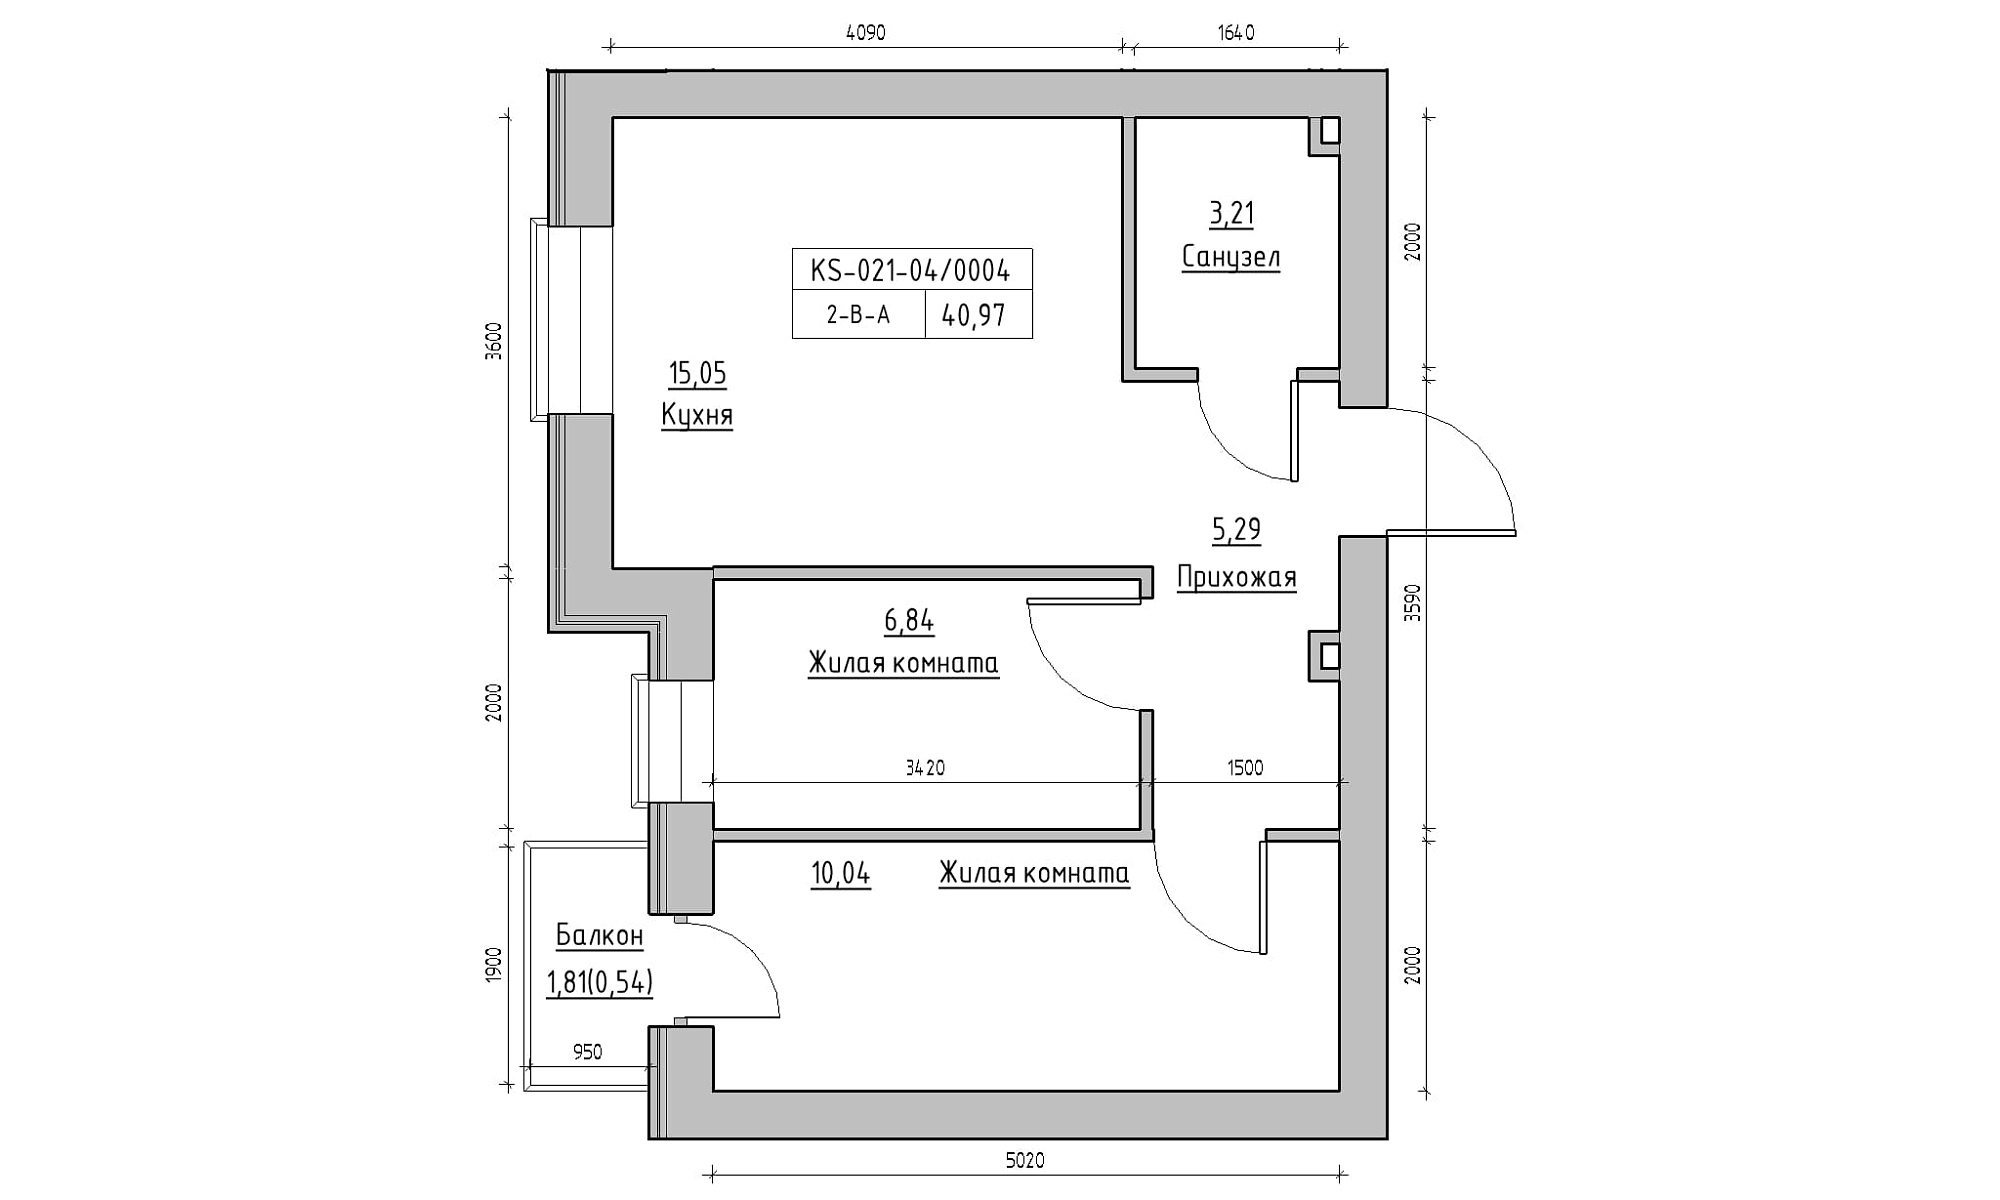 Planning 2-rm flats area 40.97m2, KS-021-04/0004.